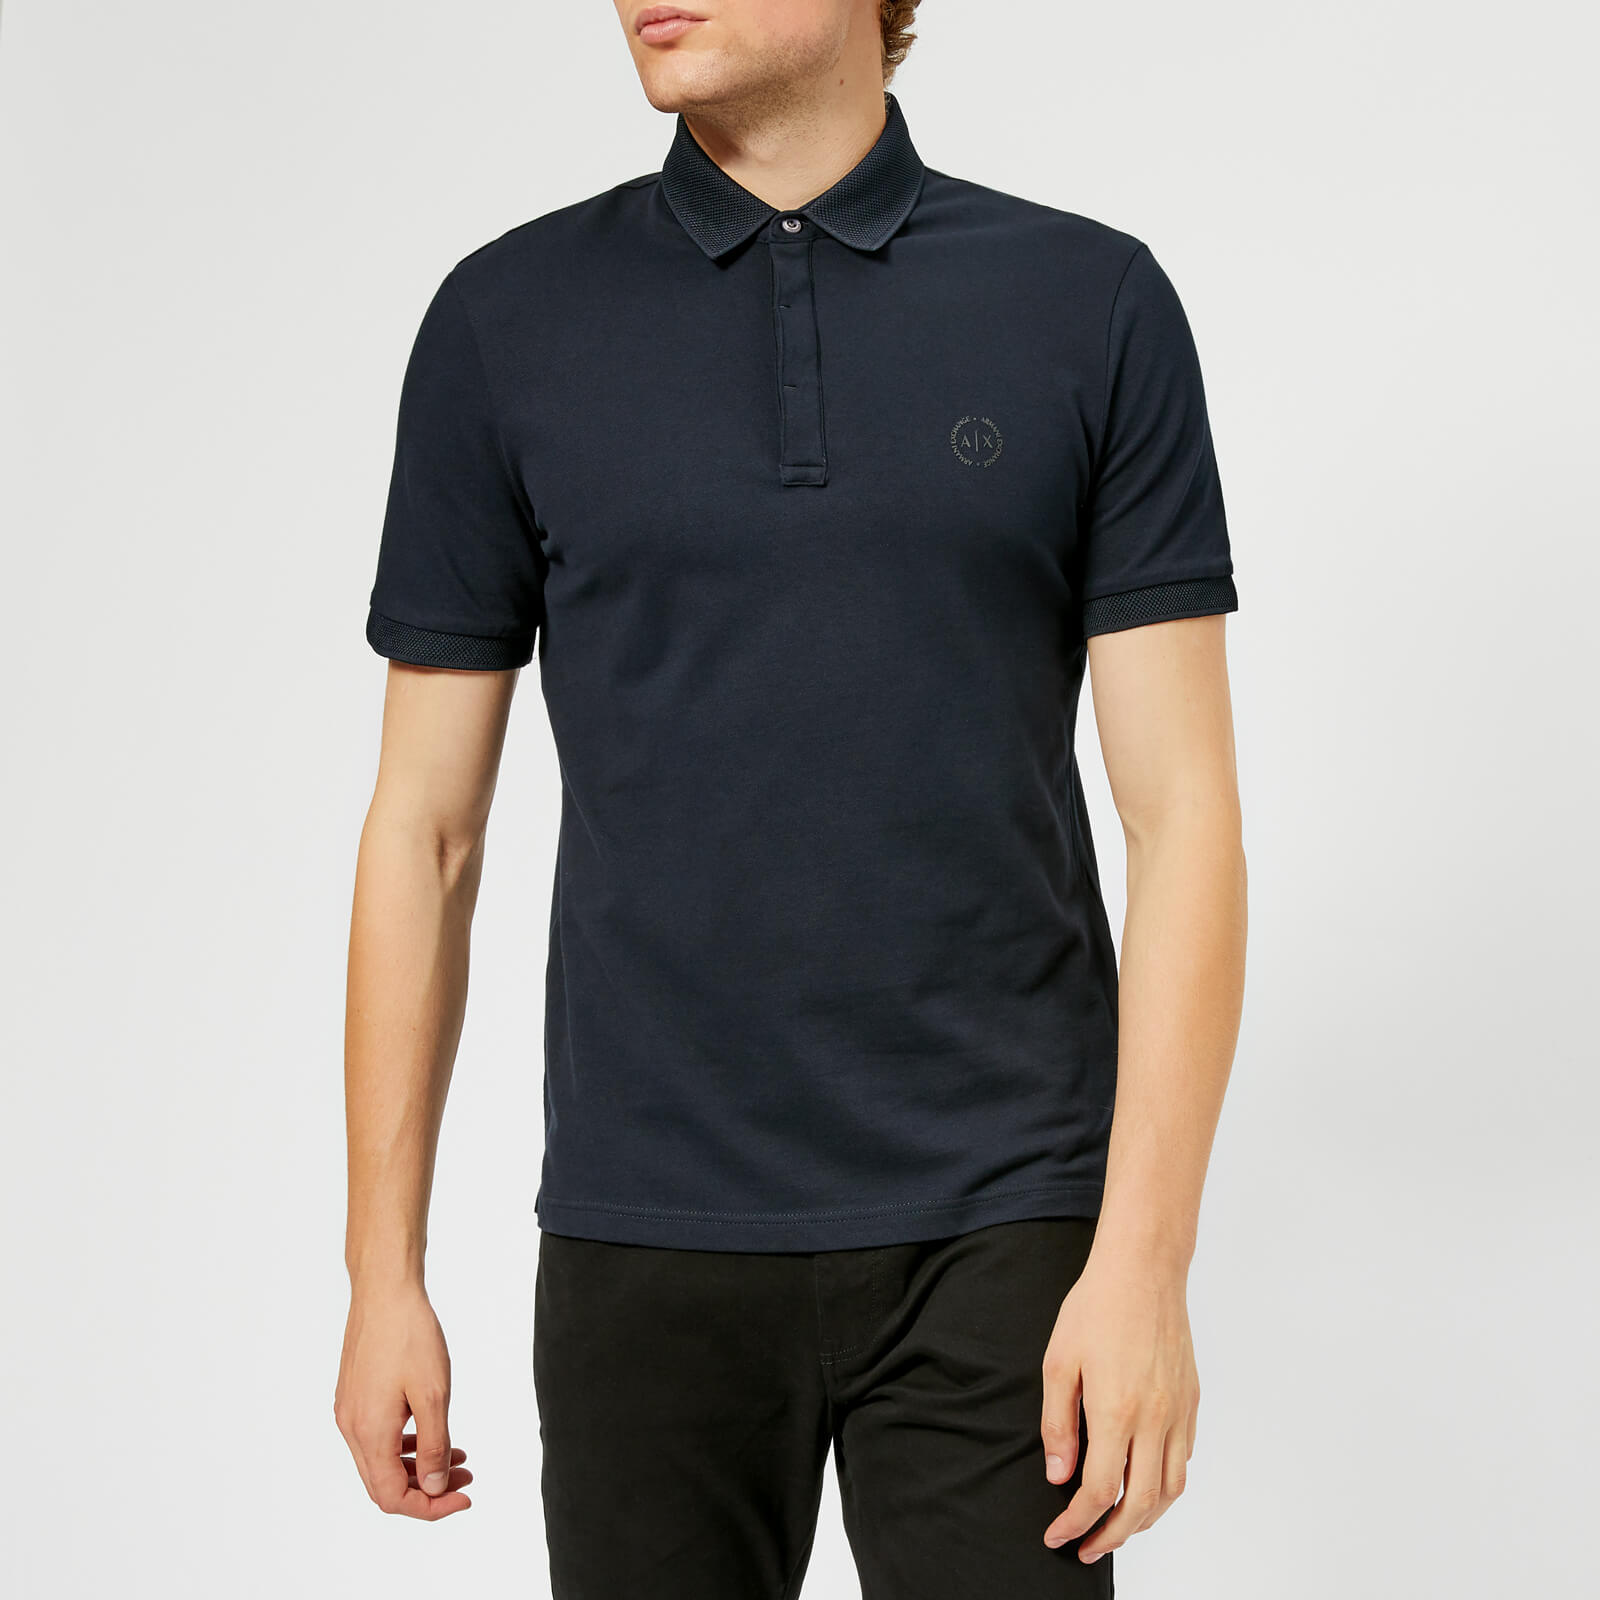 Armani Exchange Men's Basic Polo Shirt - Navy - M